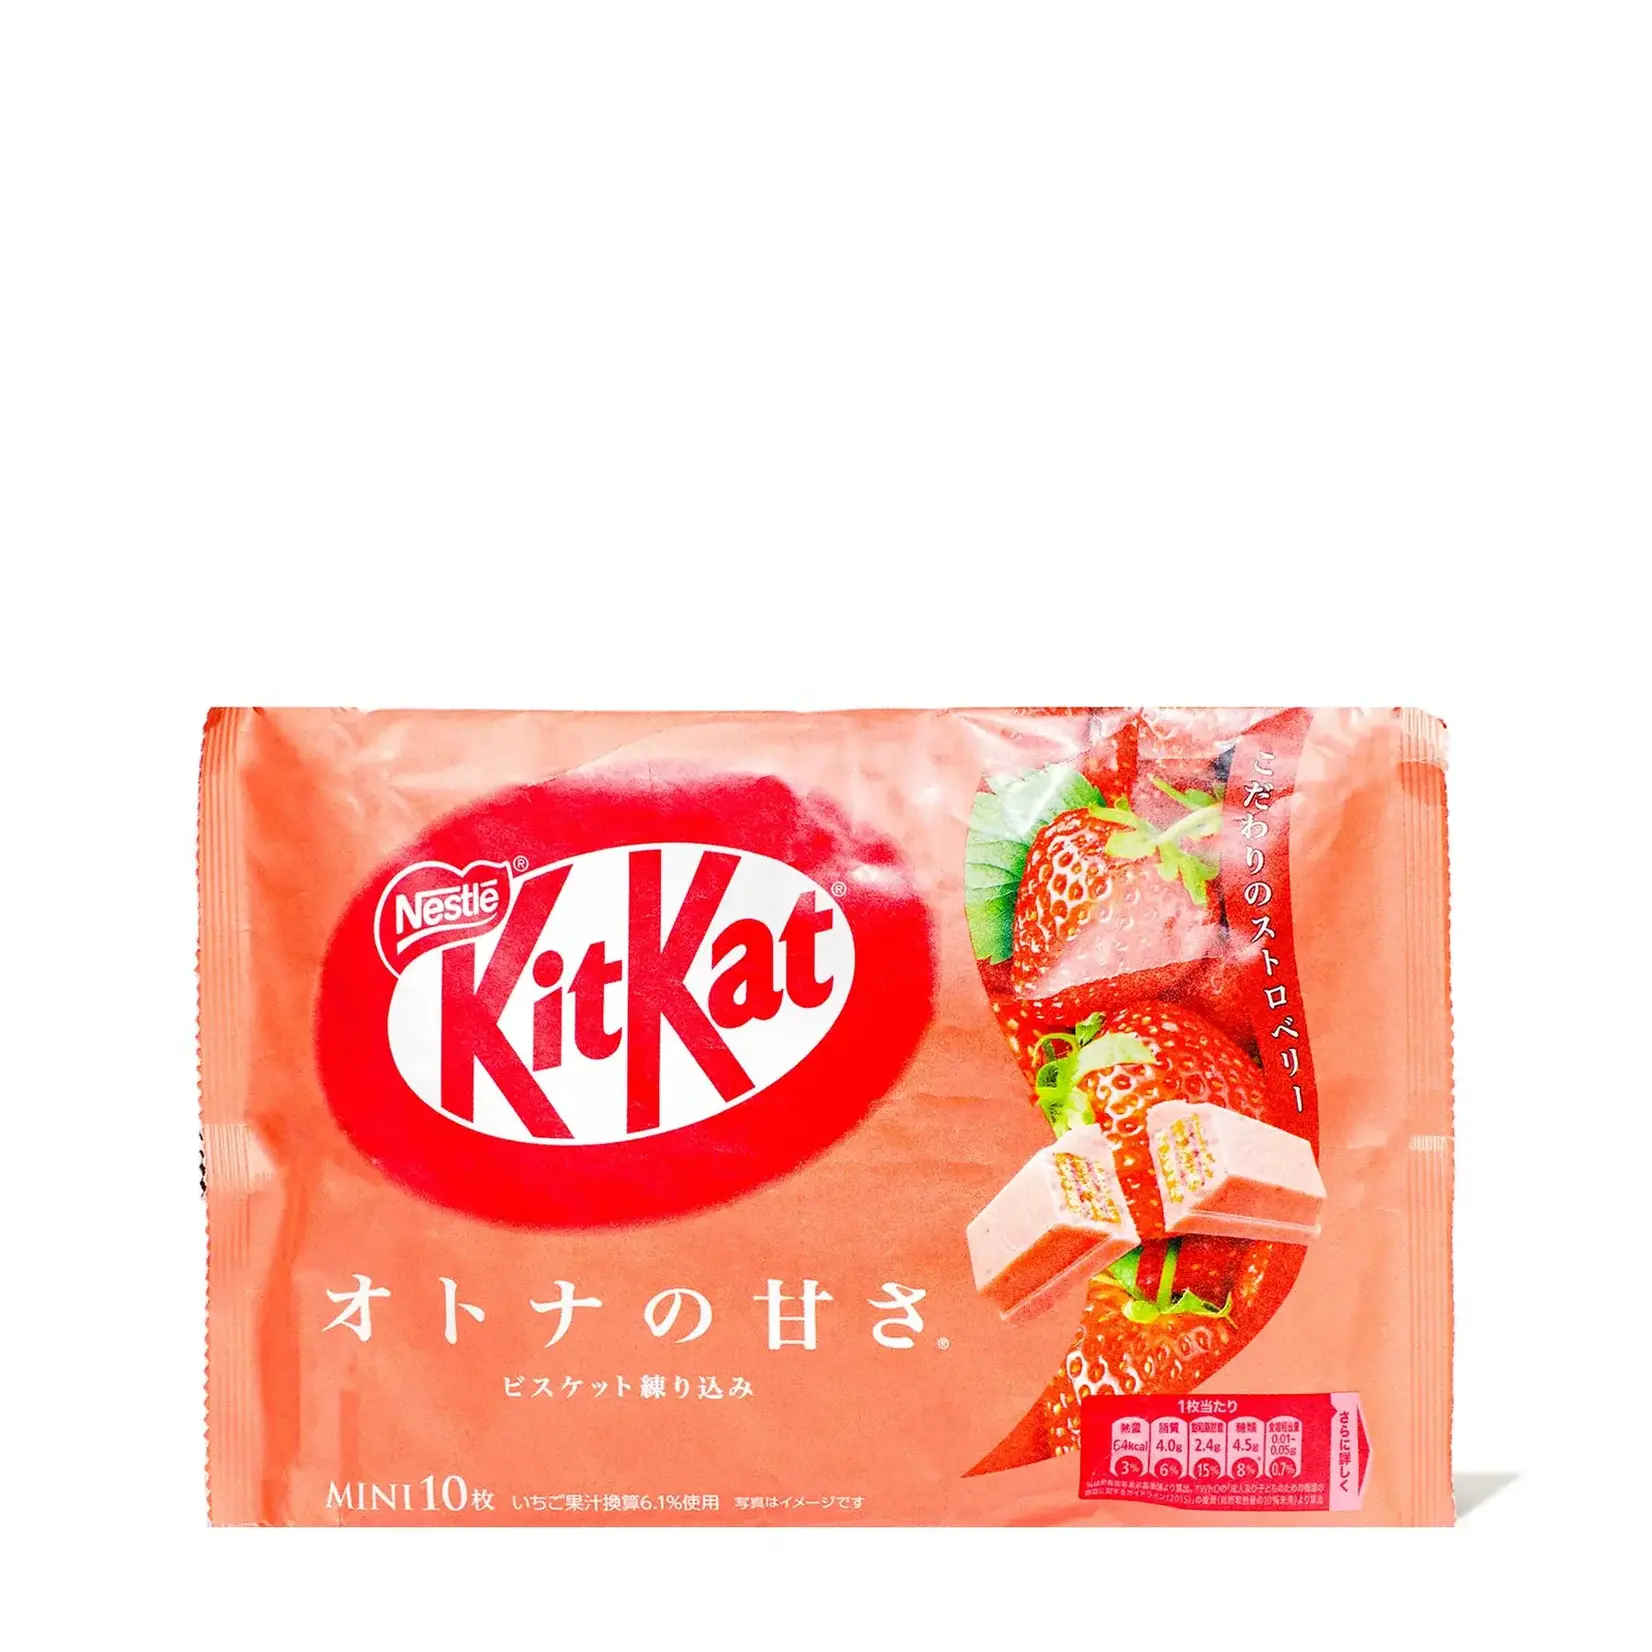 Grandpa Joe's Japanese Kit Kat Strawberry